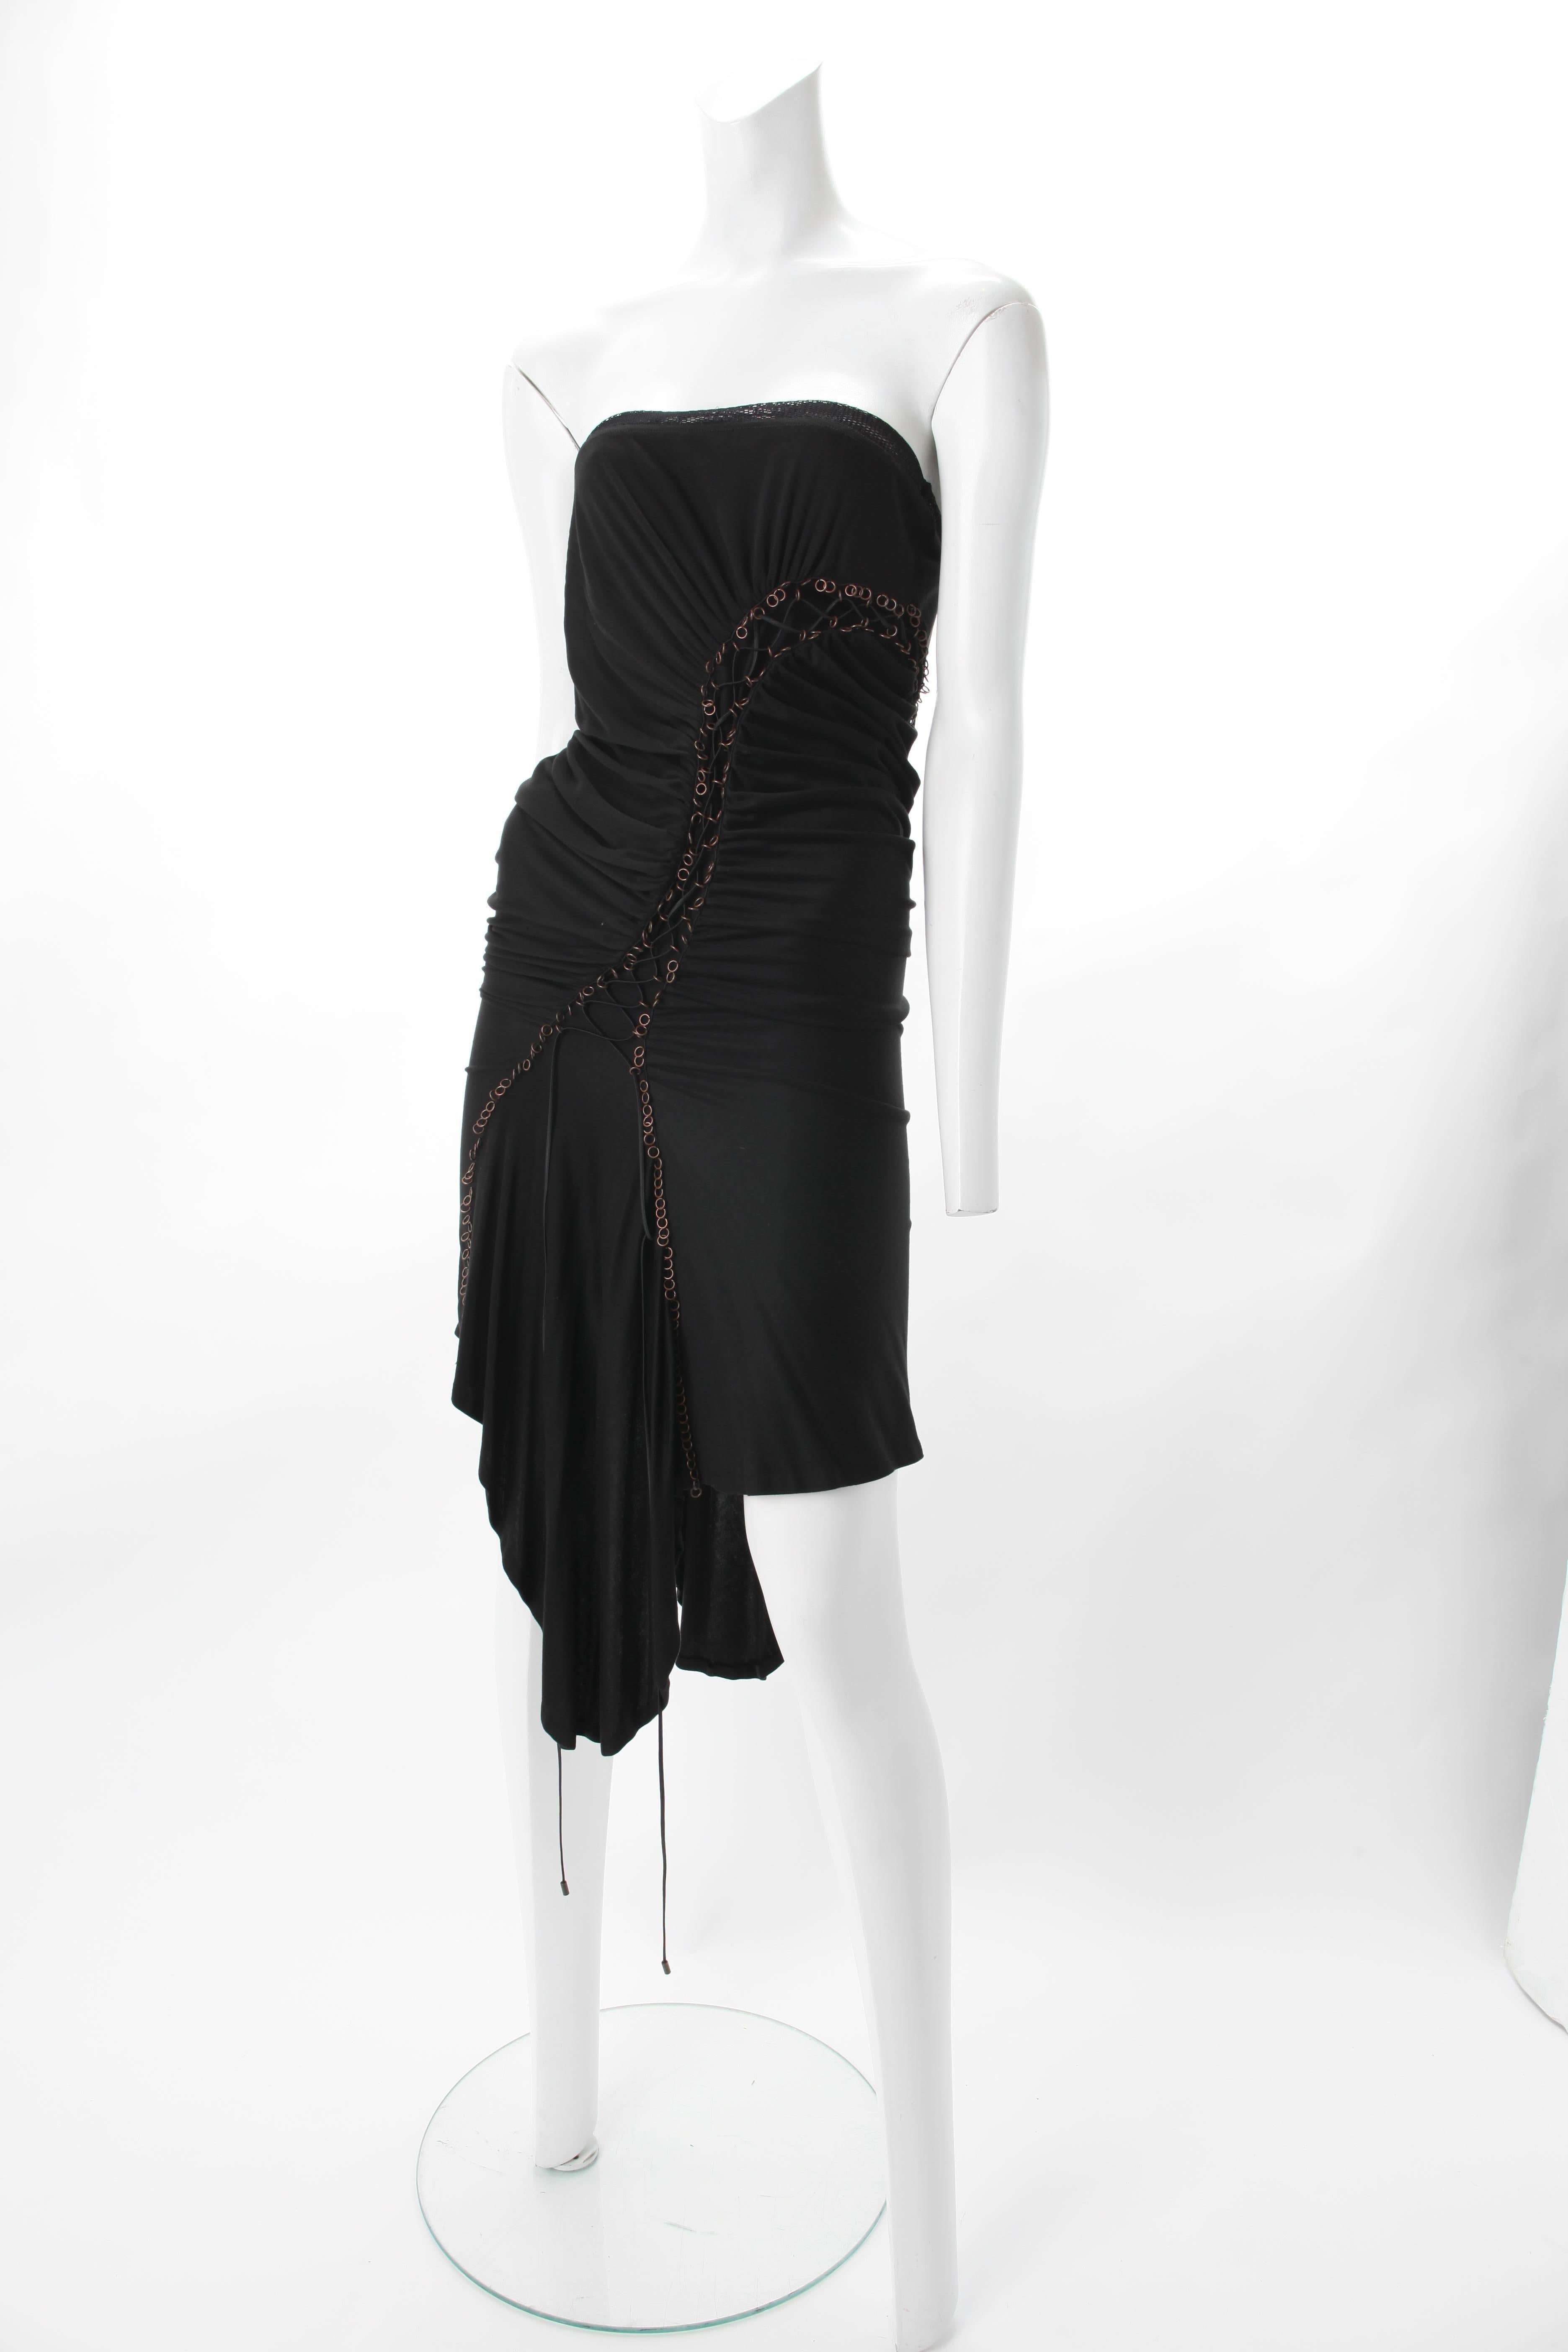 Alexander McQueen Draped Black Jersey Cocktail Dress, c.2000s.
Alexander McQueen Draped 